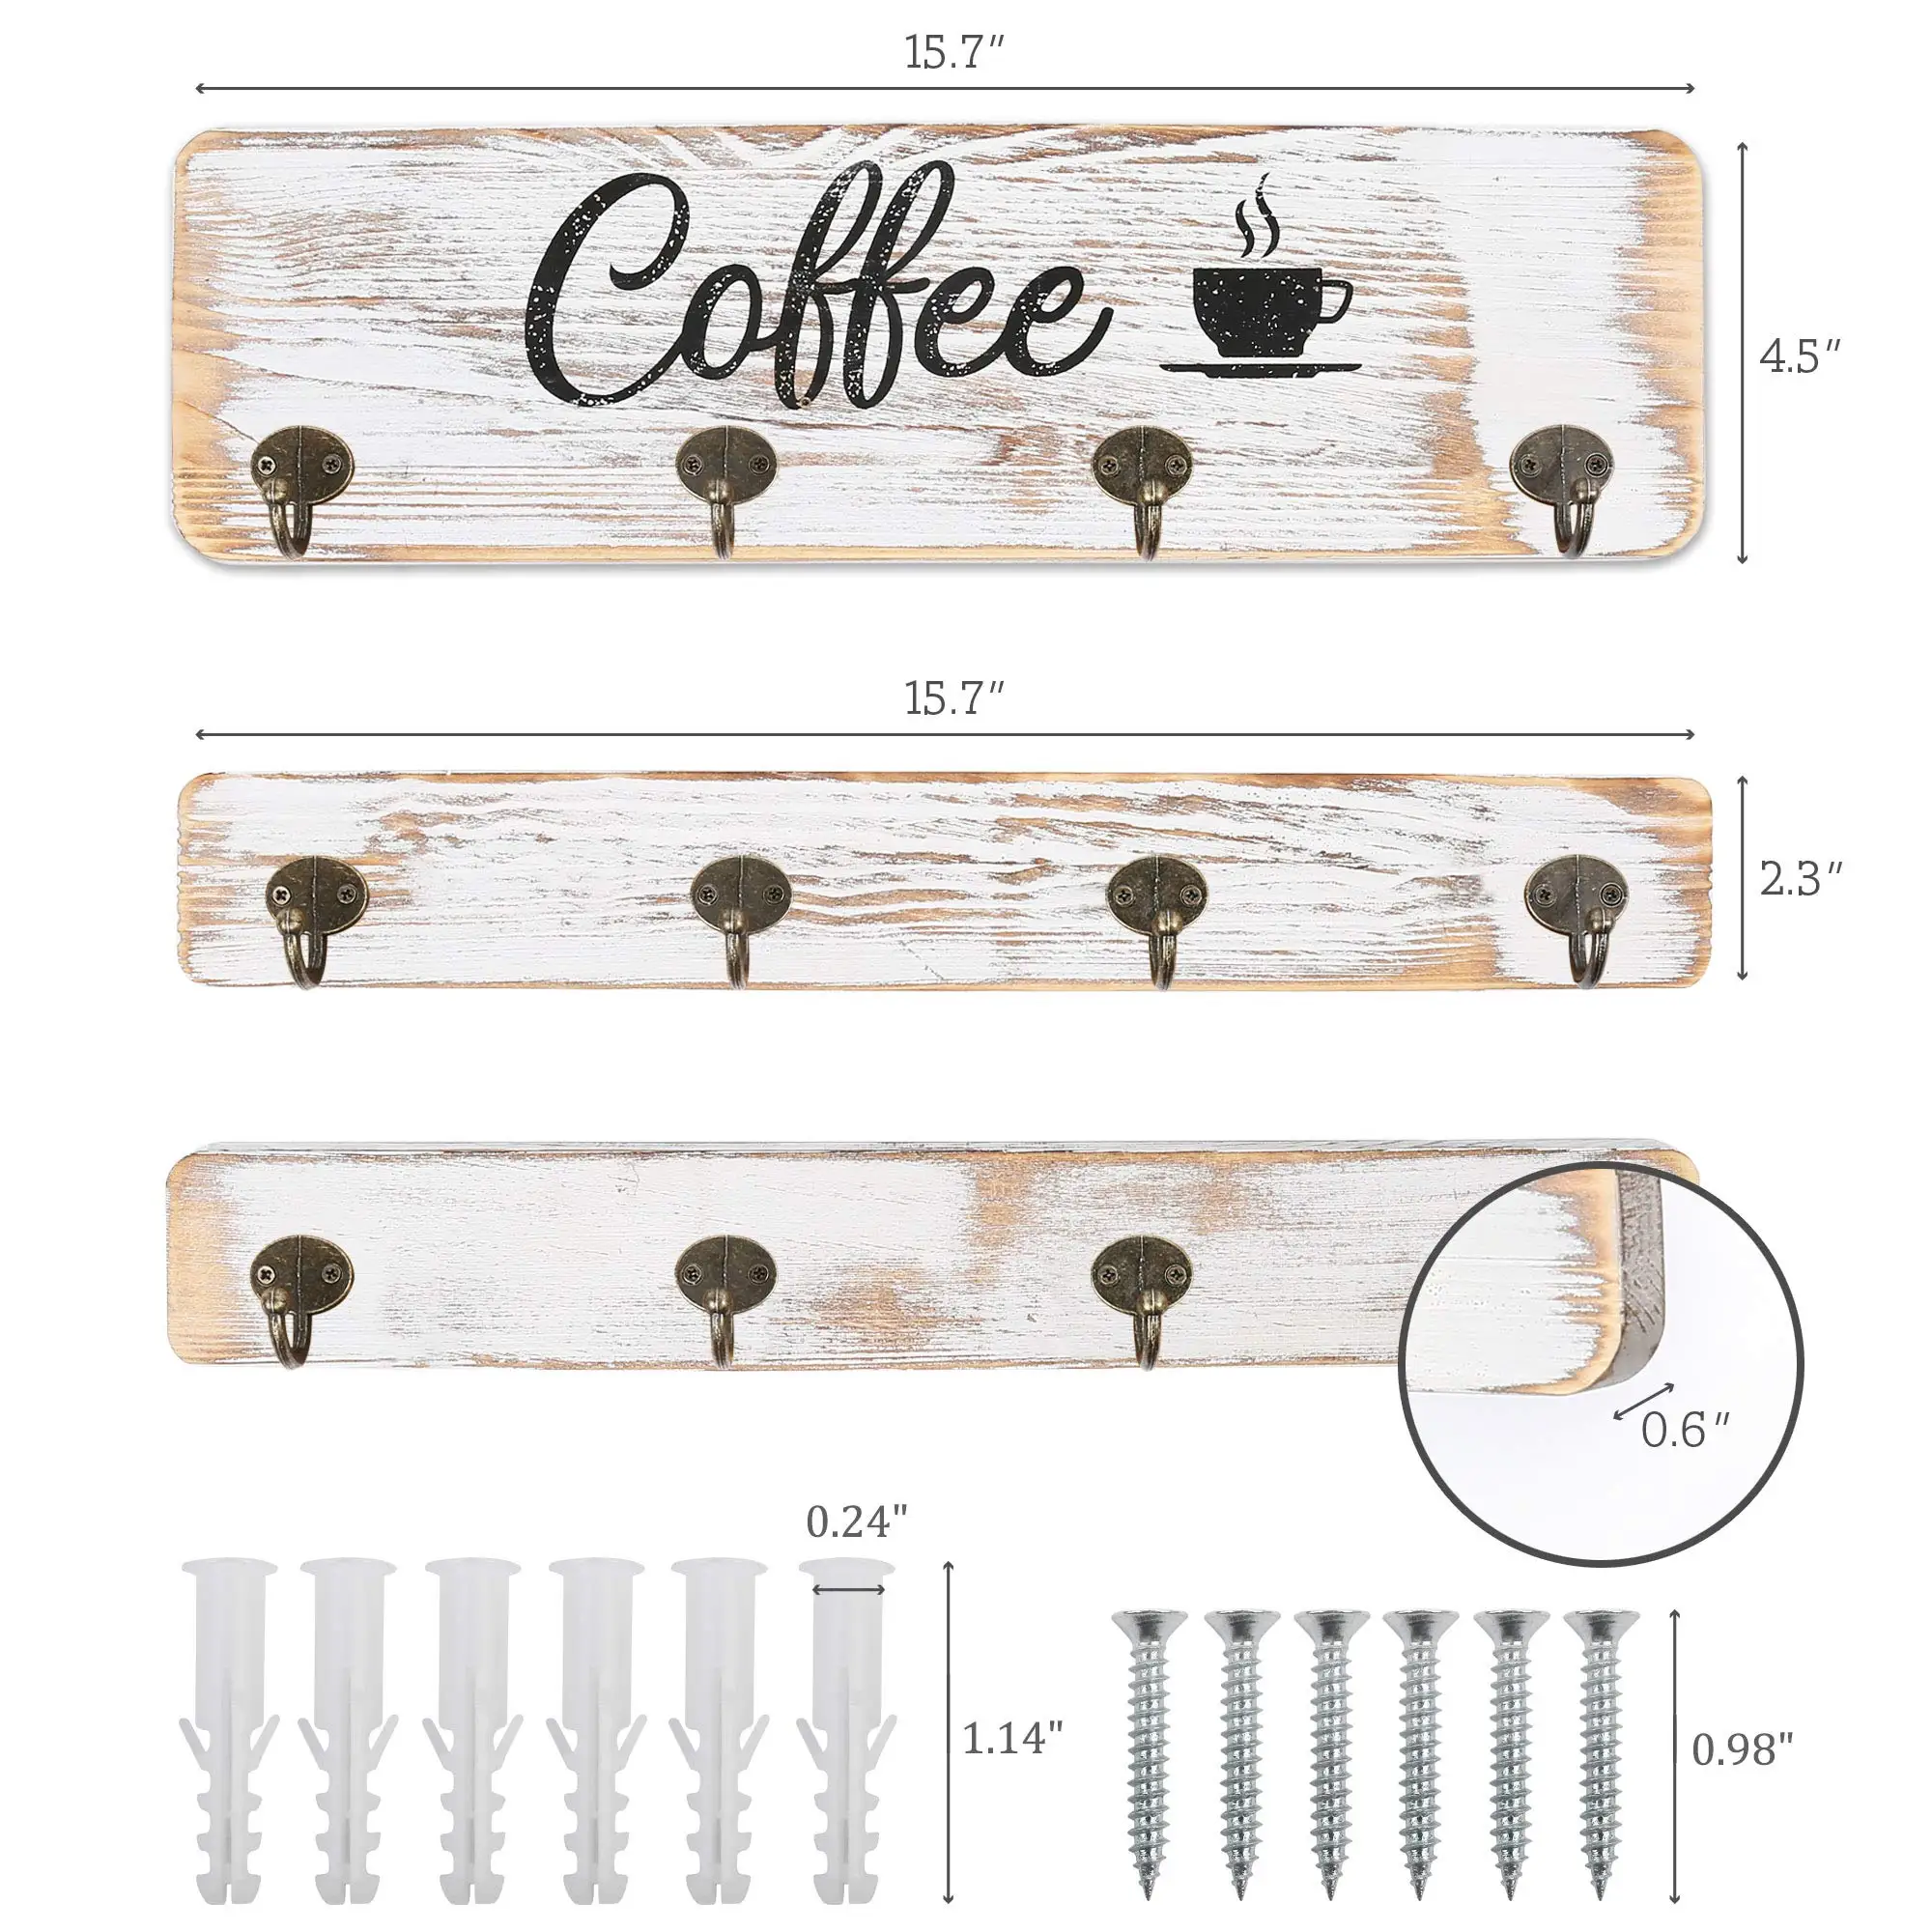 Coffee Mug Holder Rustic Wall Mounted Mug Rack with 12 Cup Hangers Farmhouse Wood Cup Organizer